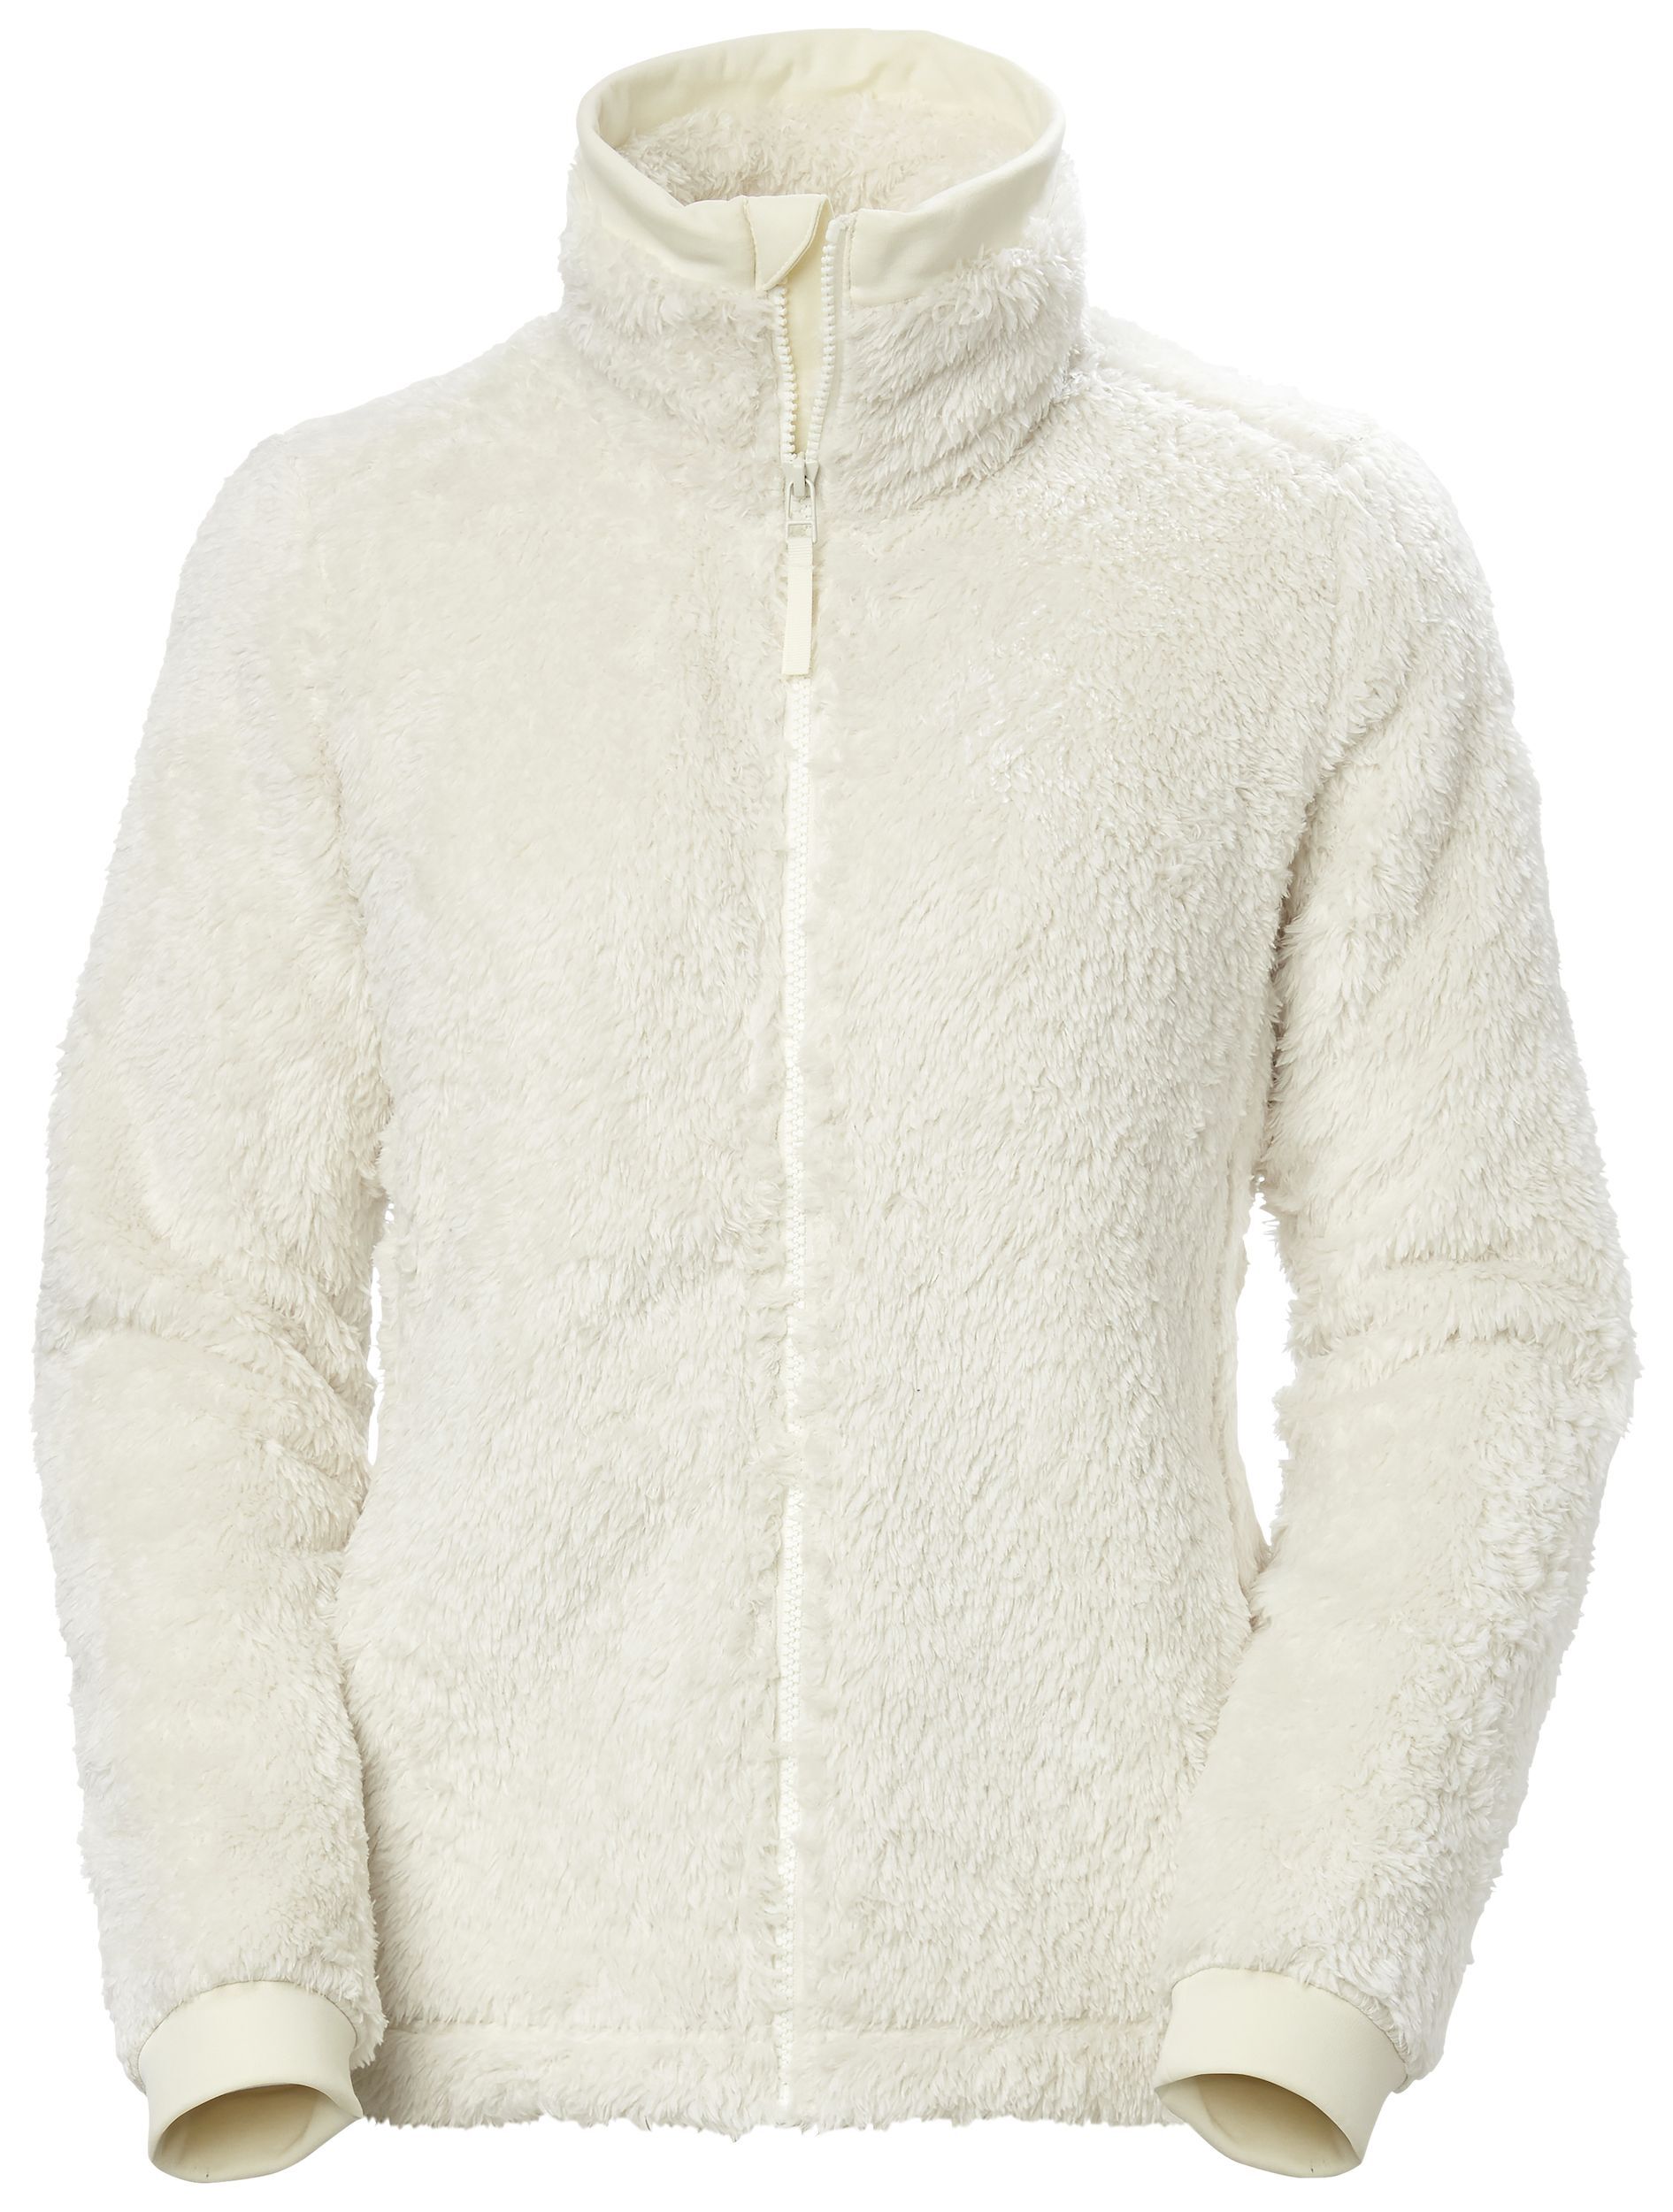 Helly Hansen Precious Fleece Jacket 2.0 - Fleecevest - Dames